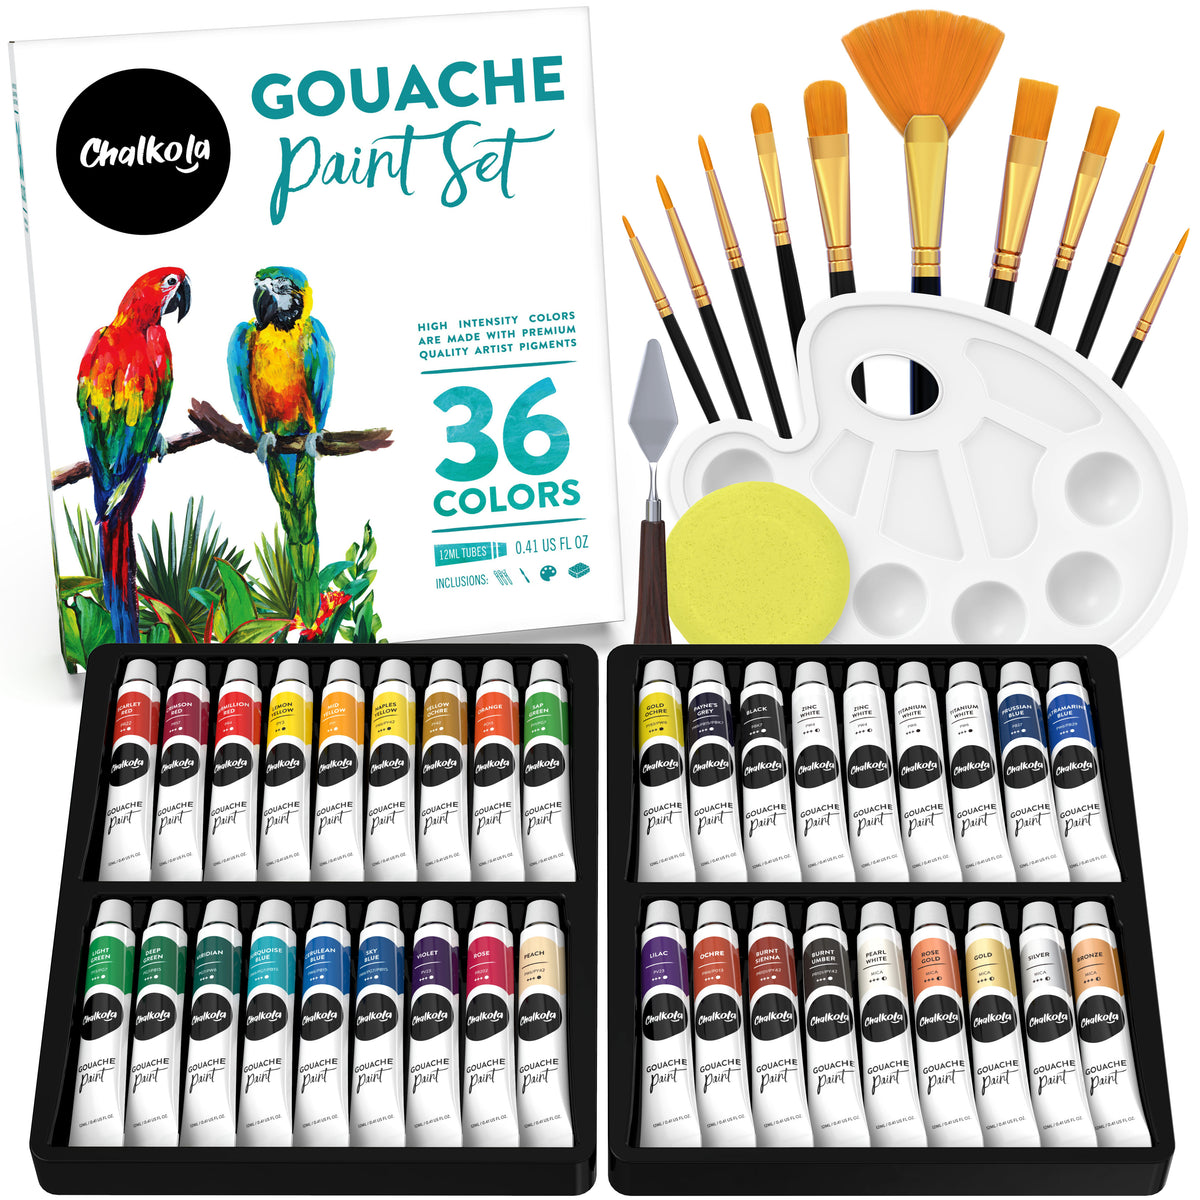 Gouache Paint Set (0.4oz, 12ml) - Set of 36